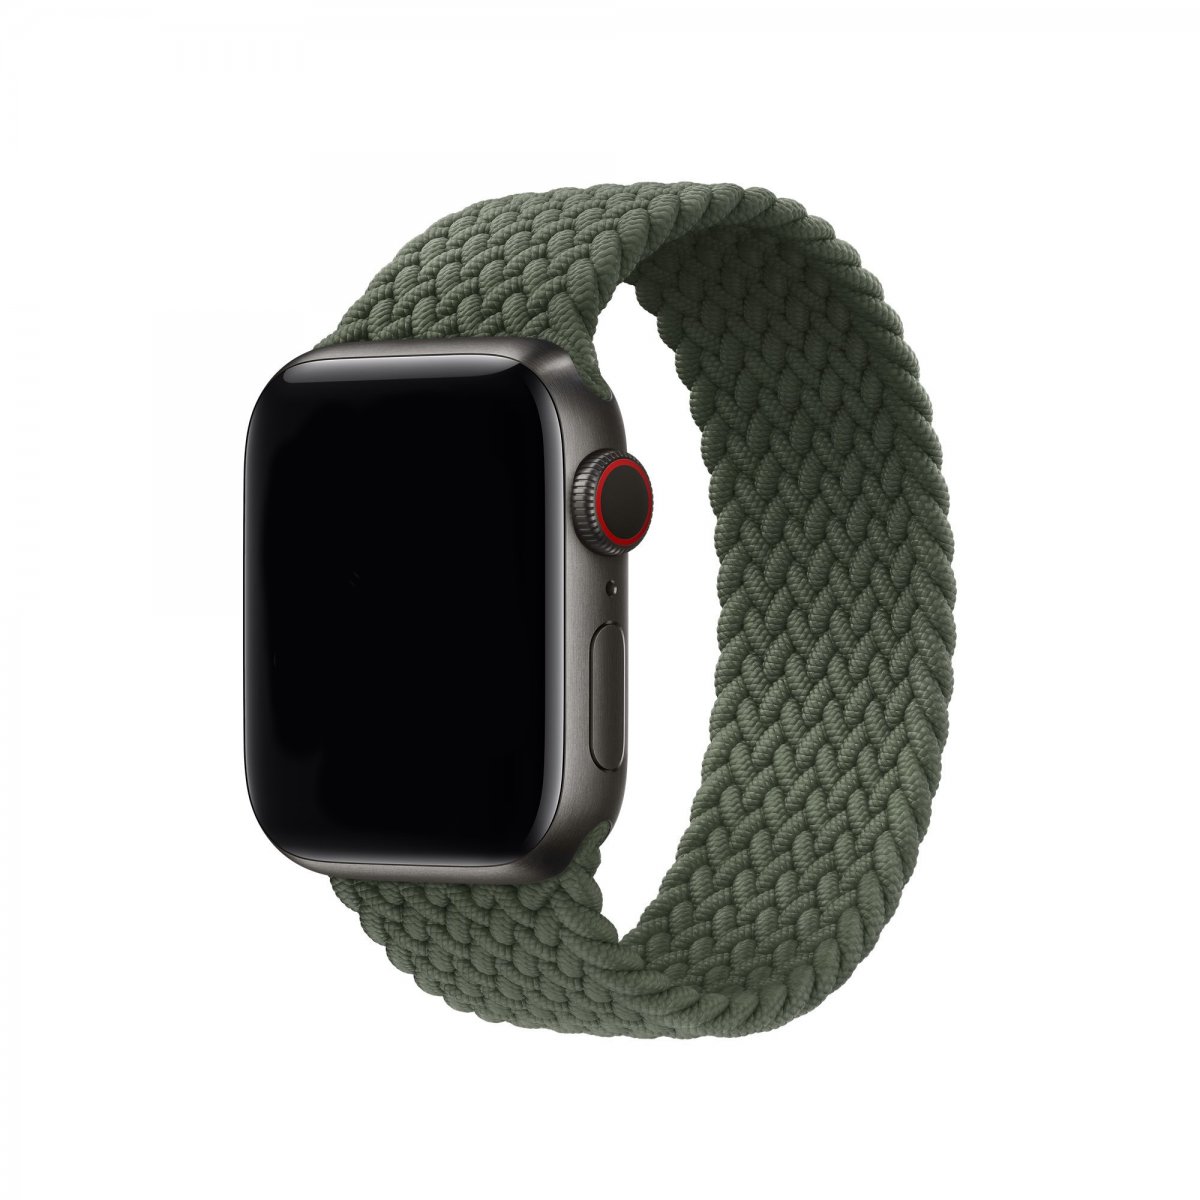 Řemínek iMore Braided Solo Loop Apple Watch Series 1/2/3 38mm - tmavě zelený (S)